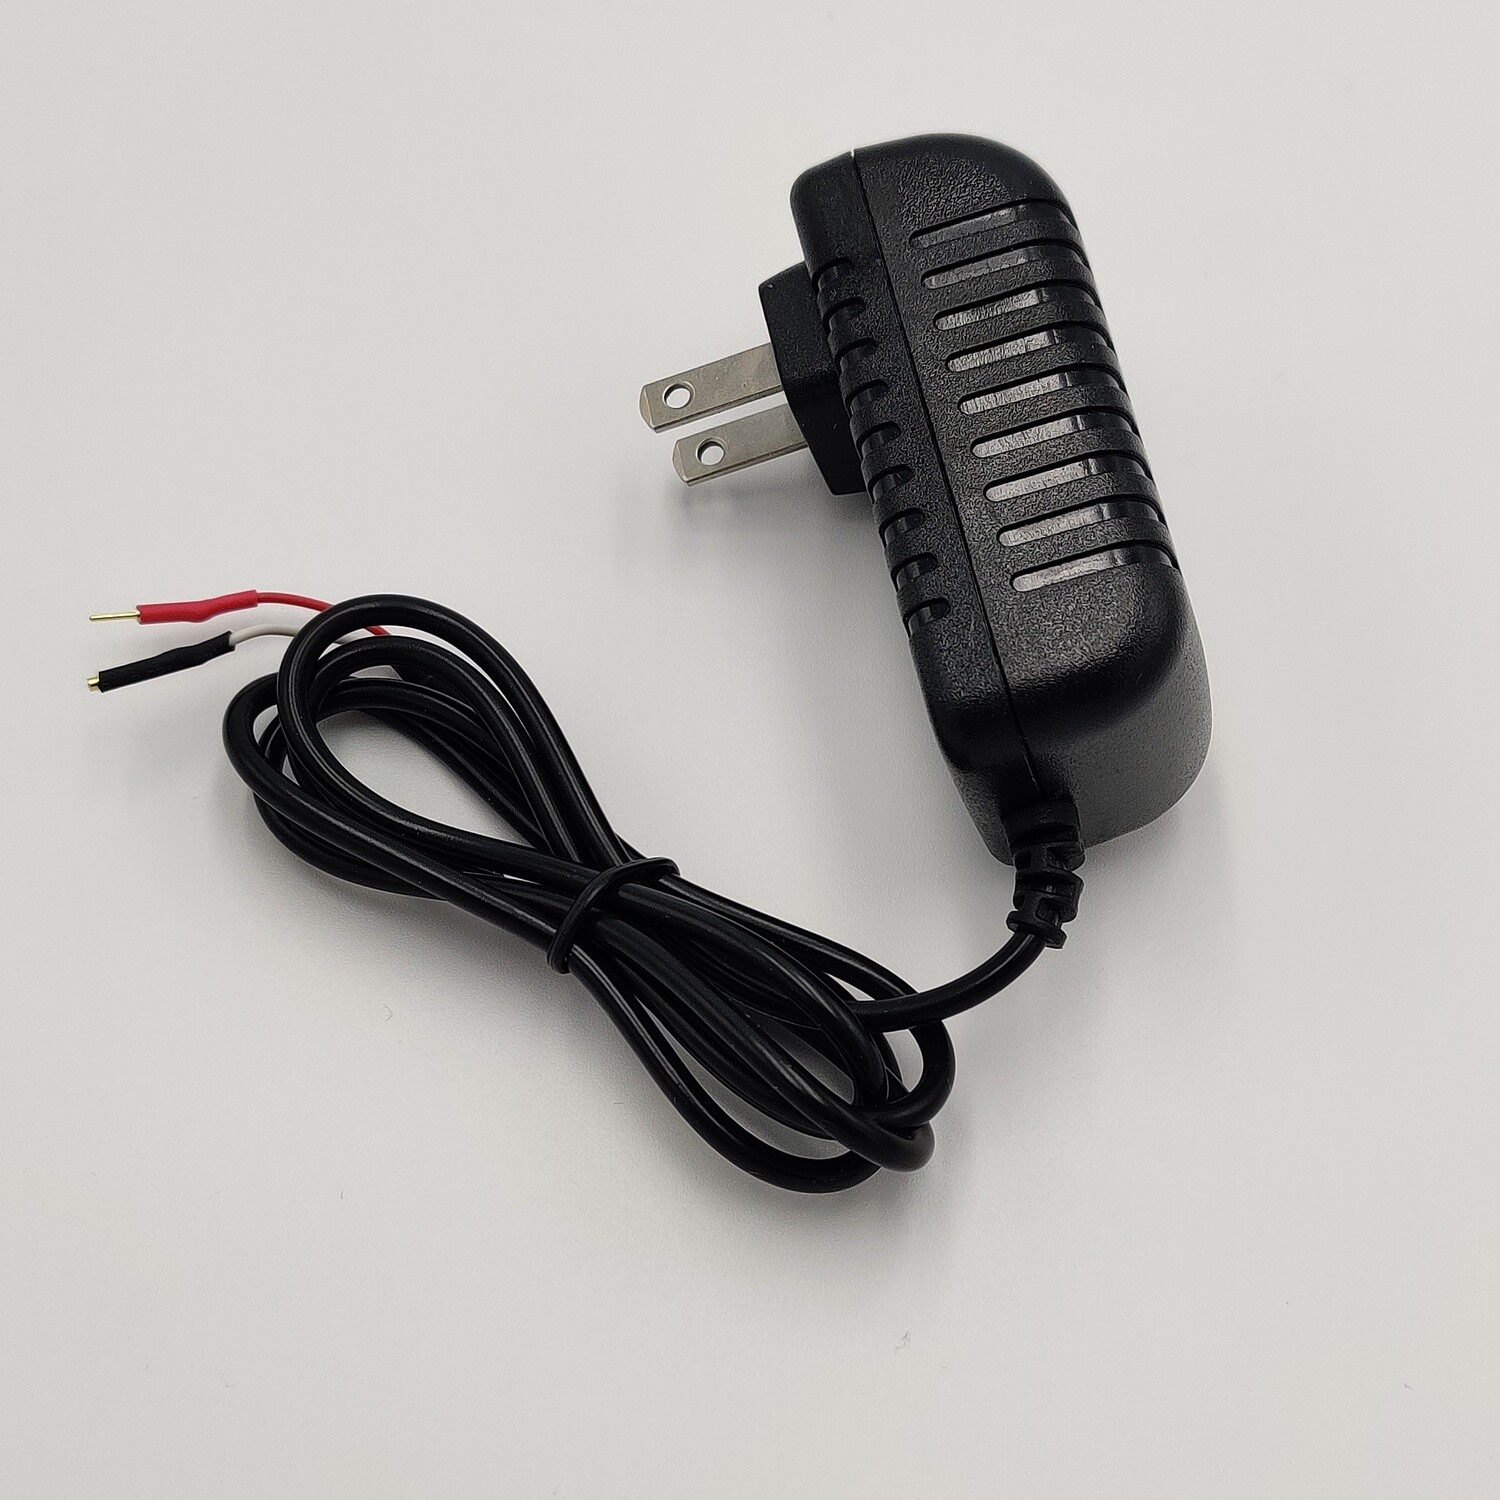 AC/DC power adaptor for USA